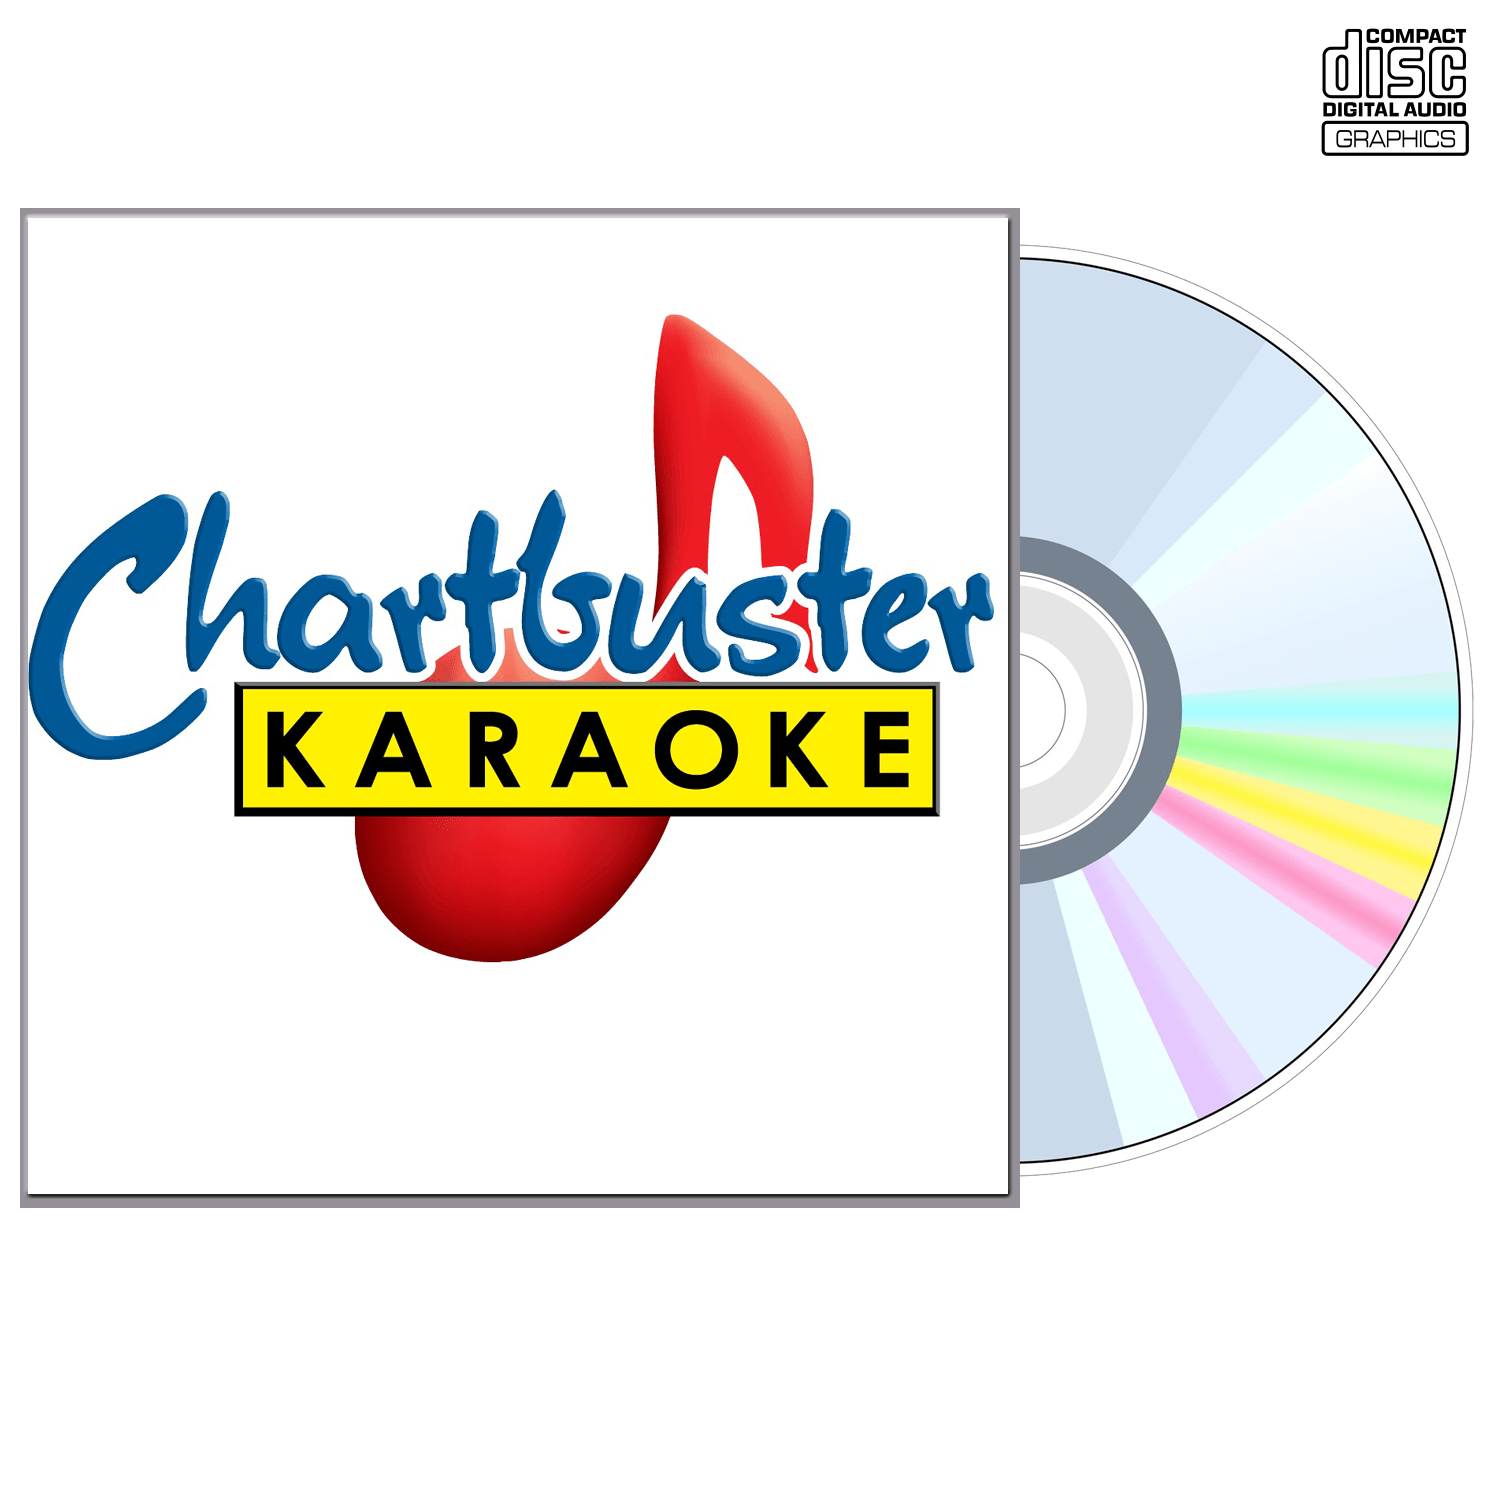 Wynonna Judd Vol 1 - CD+G - Chartbuster Karaoke - Karaoke Home Entertainment